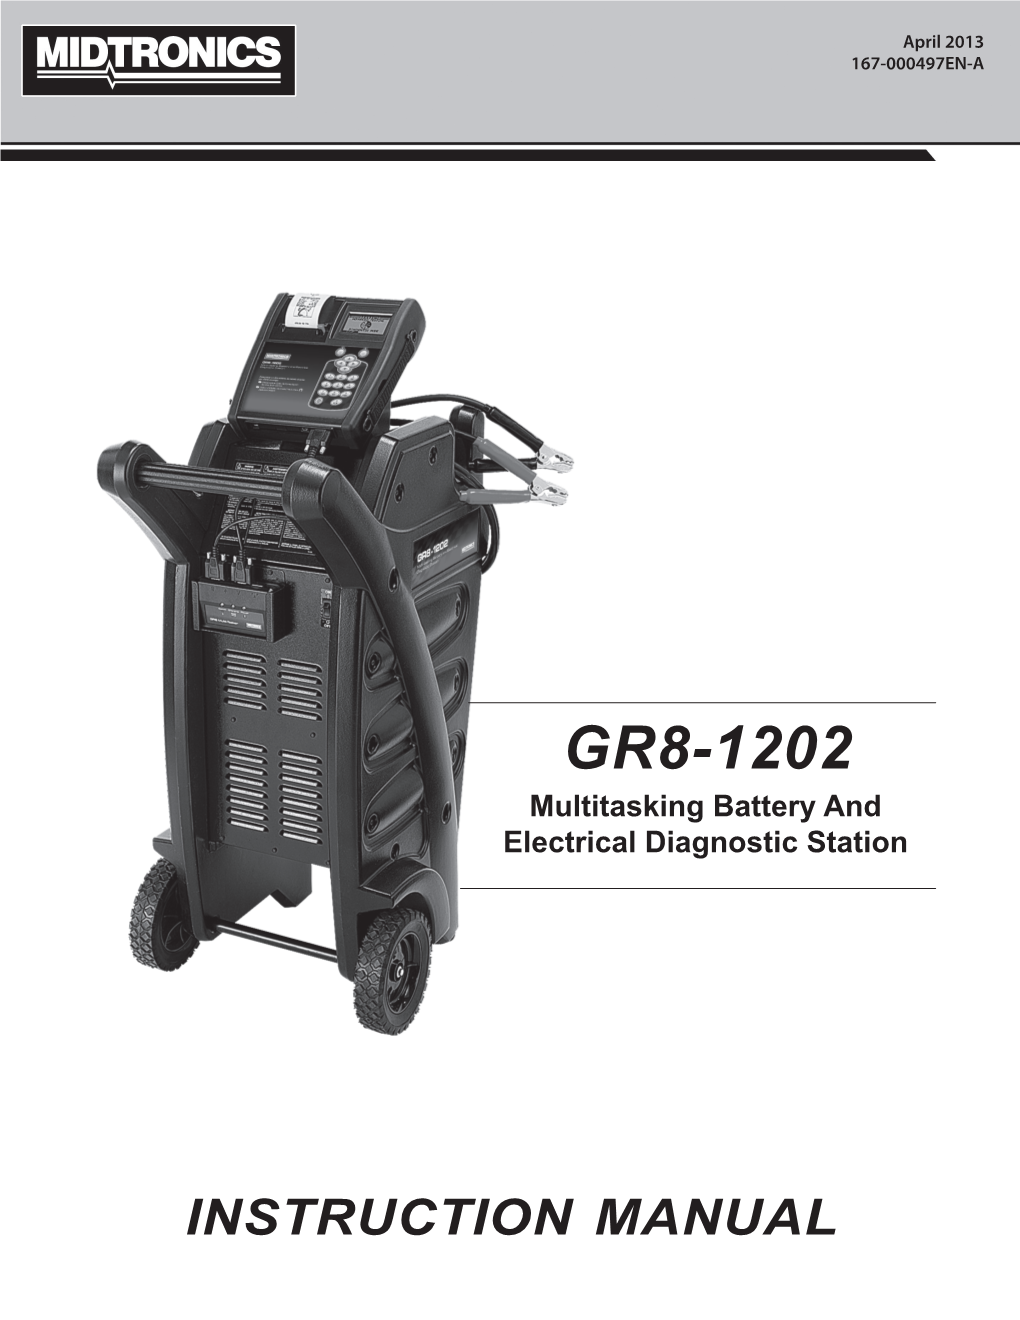 GR8-1202 Multitasking Battery and Electrical Diagnostic Station